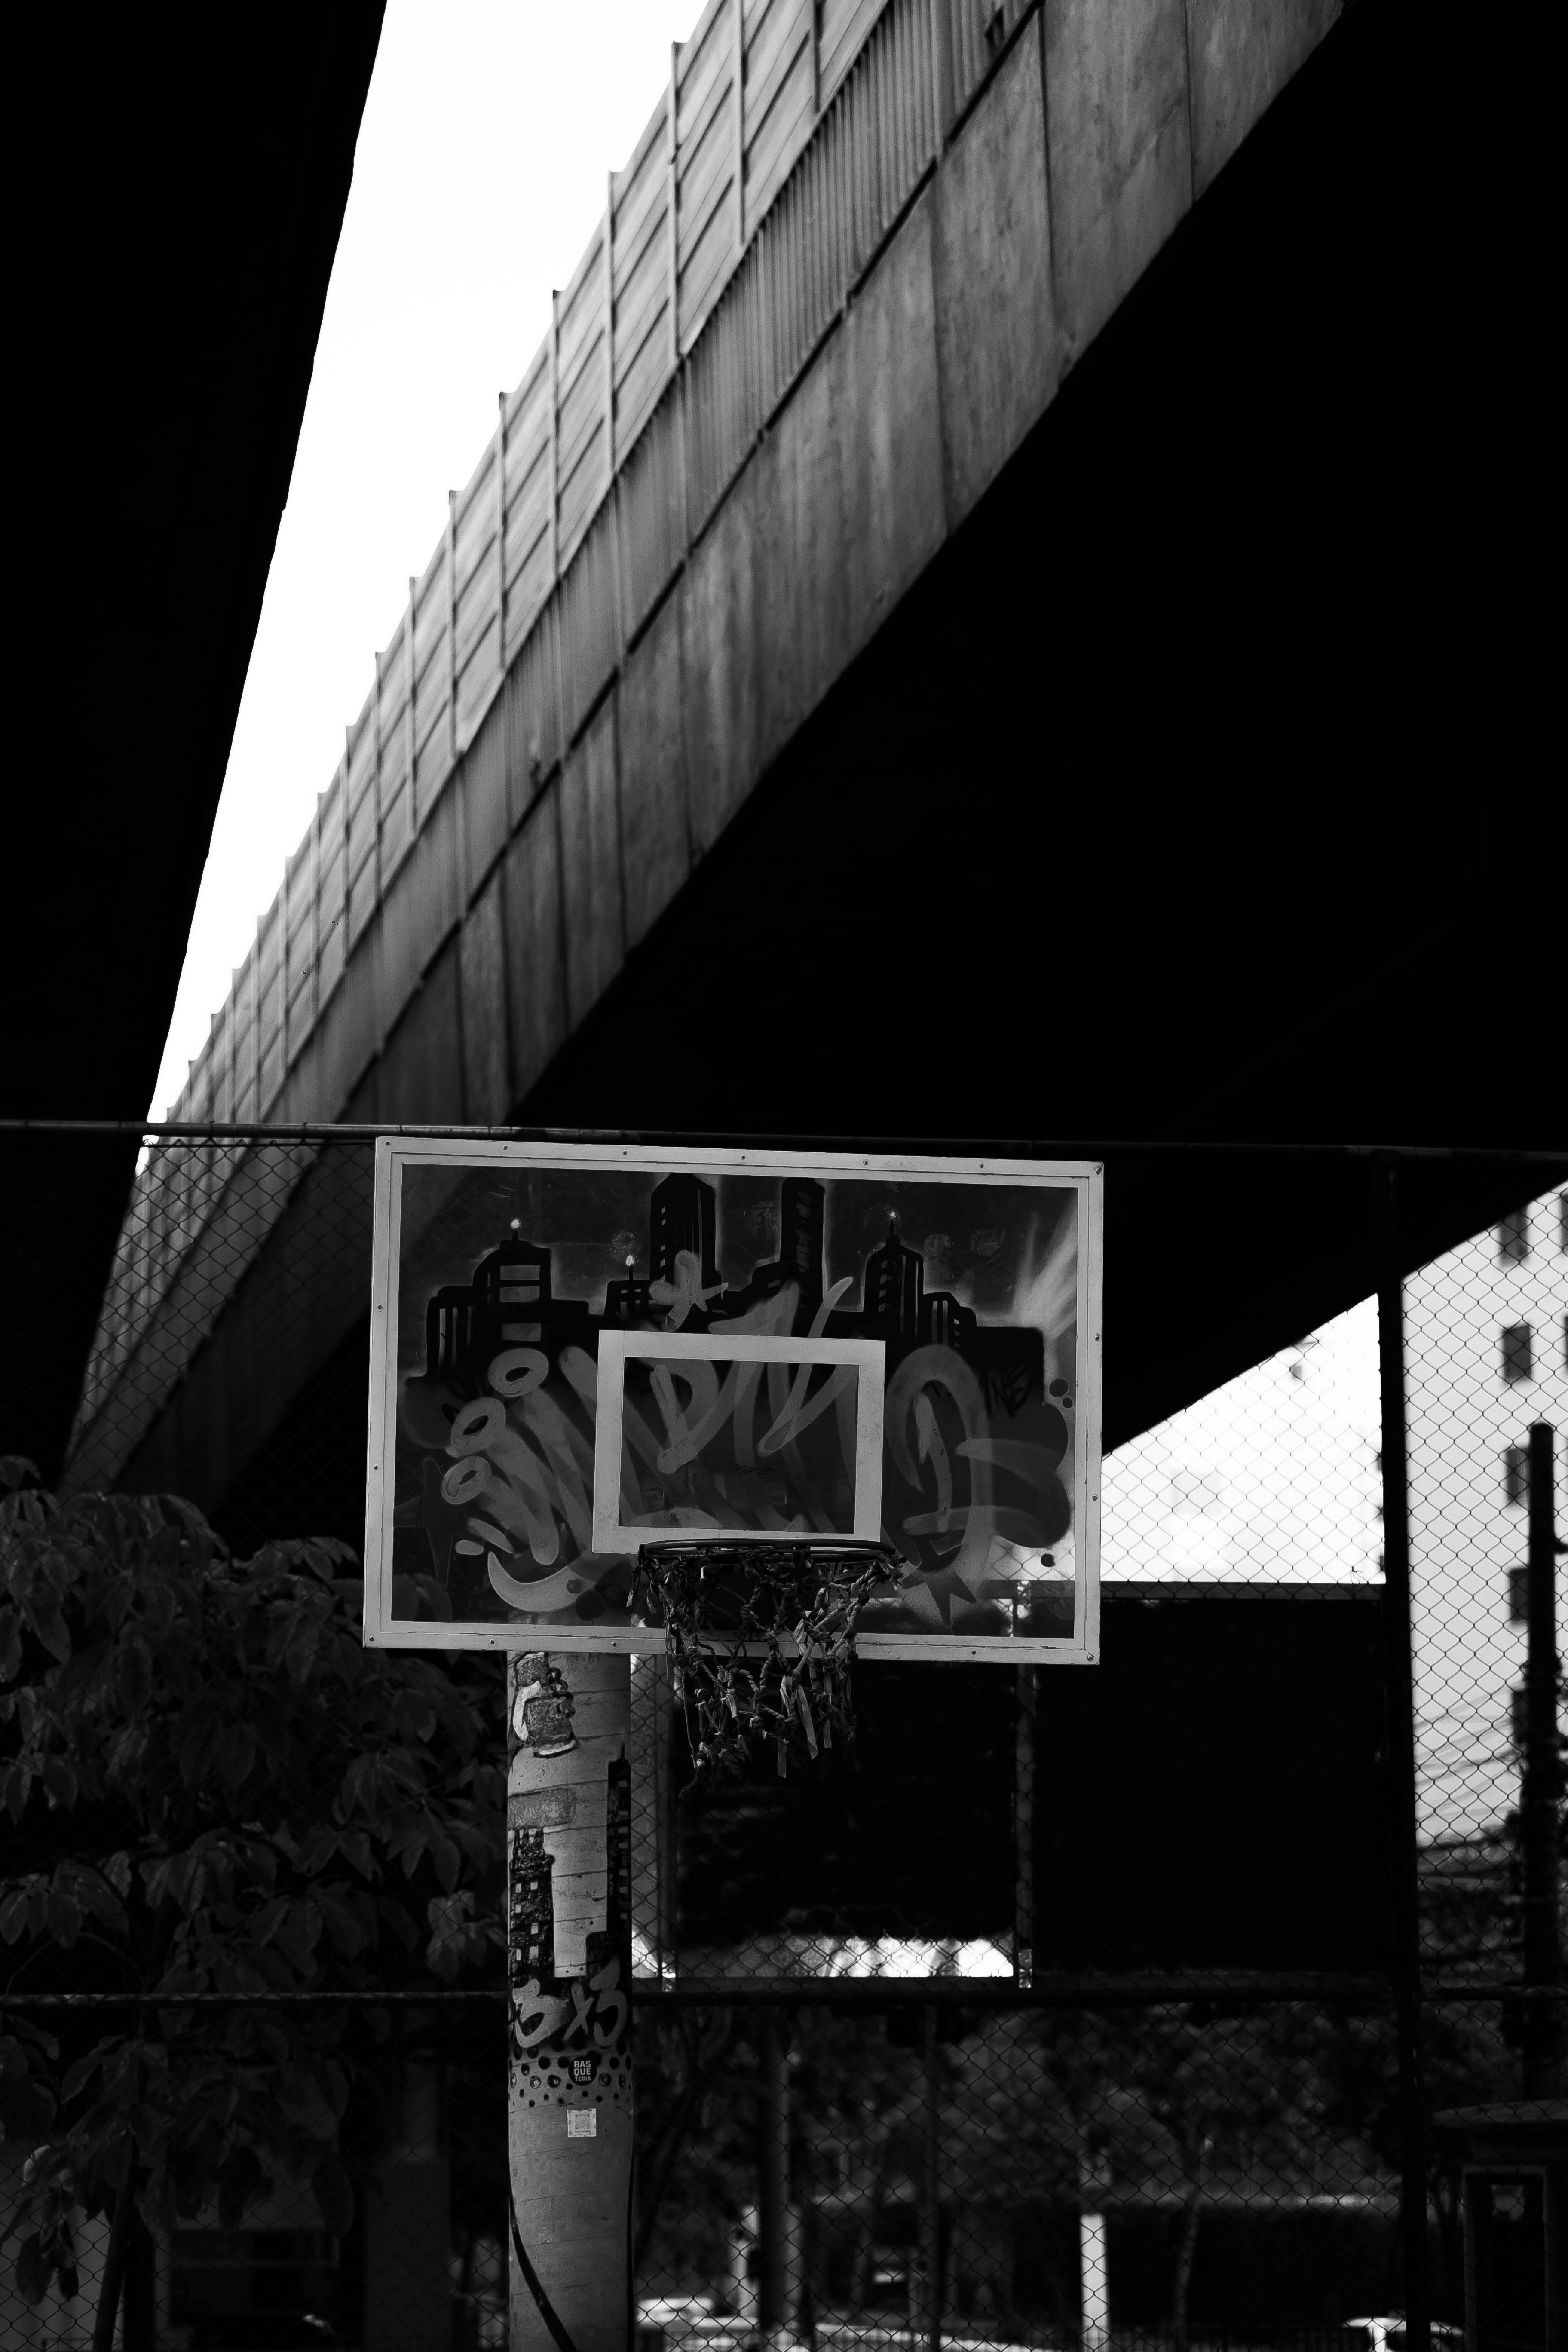 basketball basket in an urban area